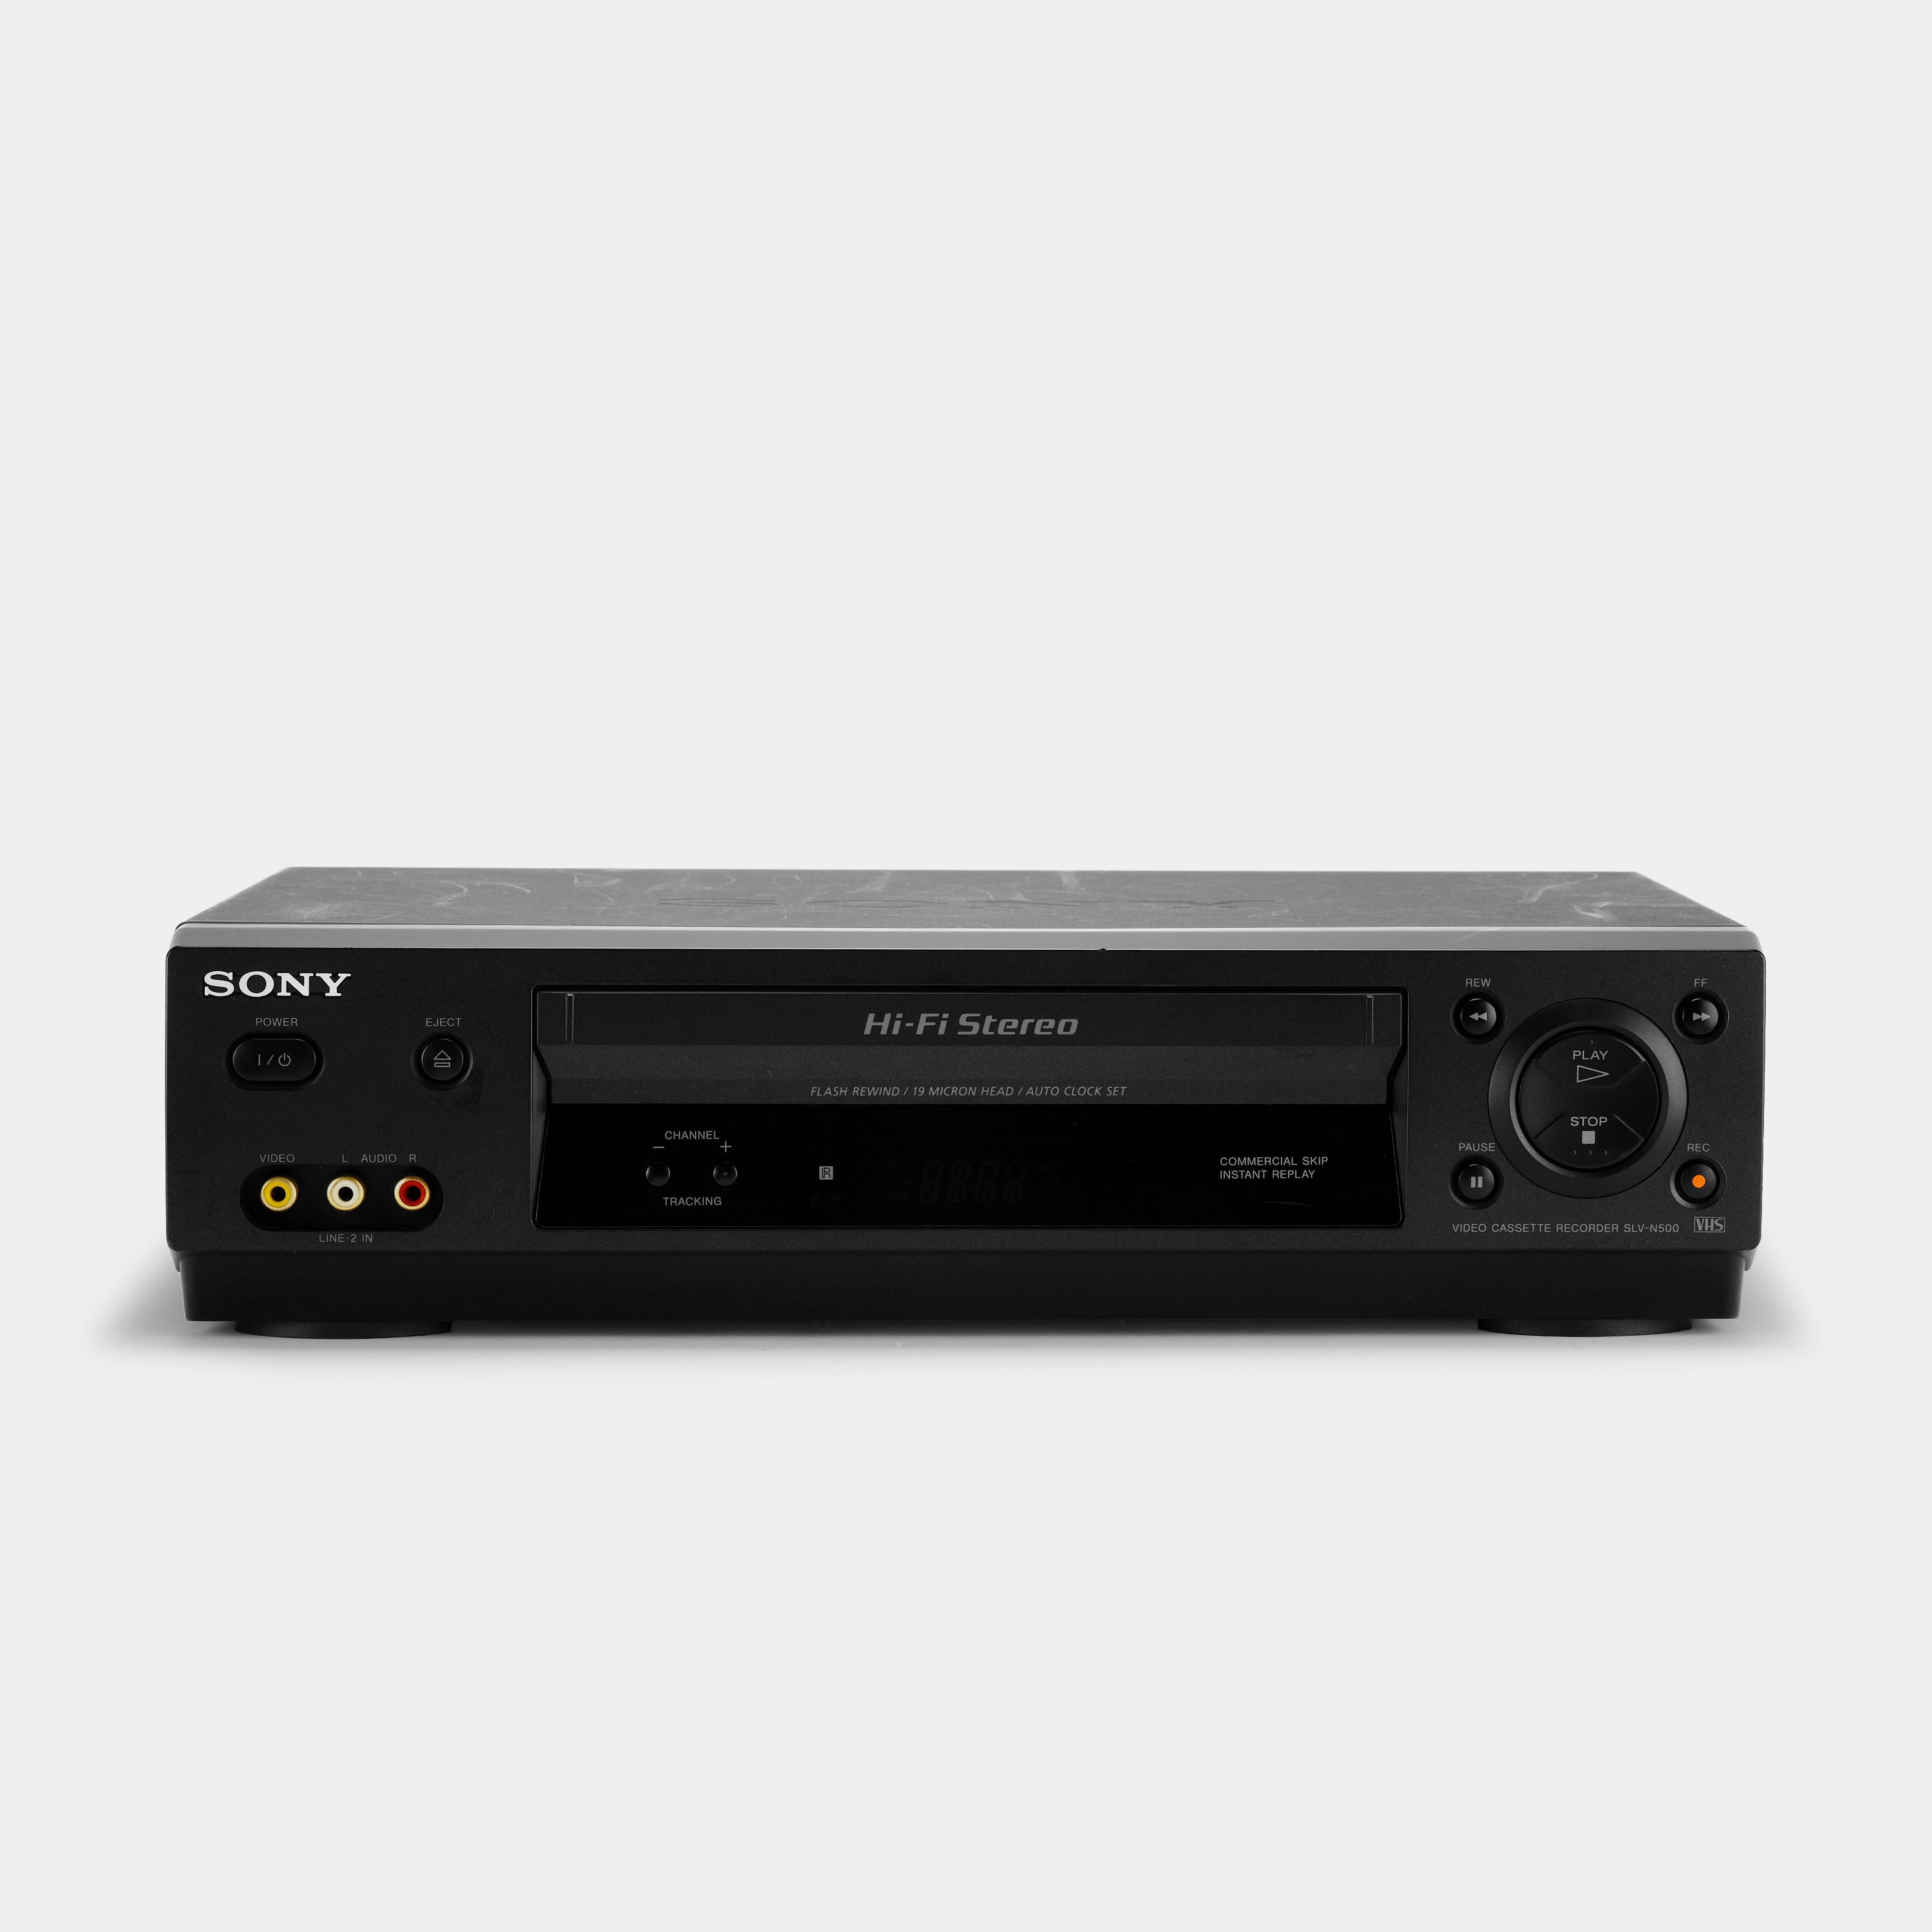 Sony SLV-N500 VCR VHS Player